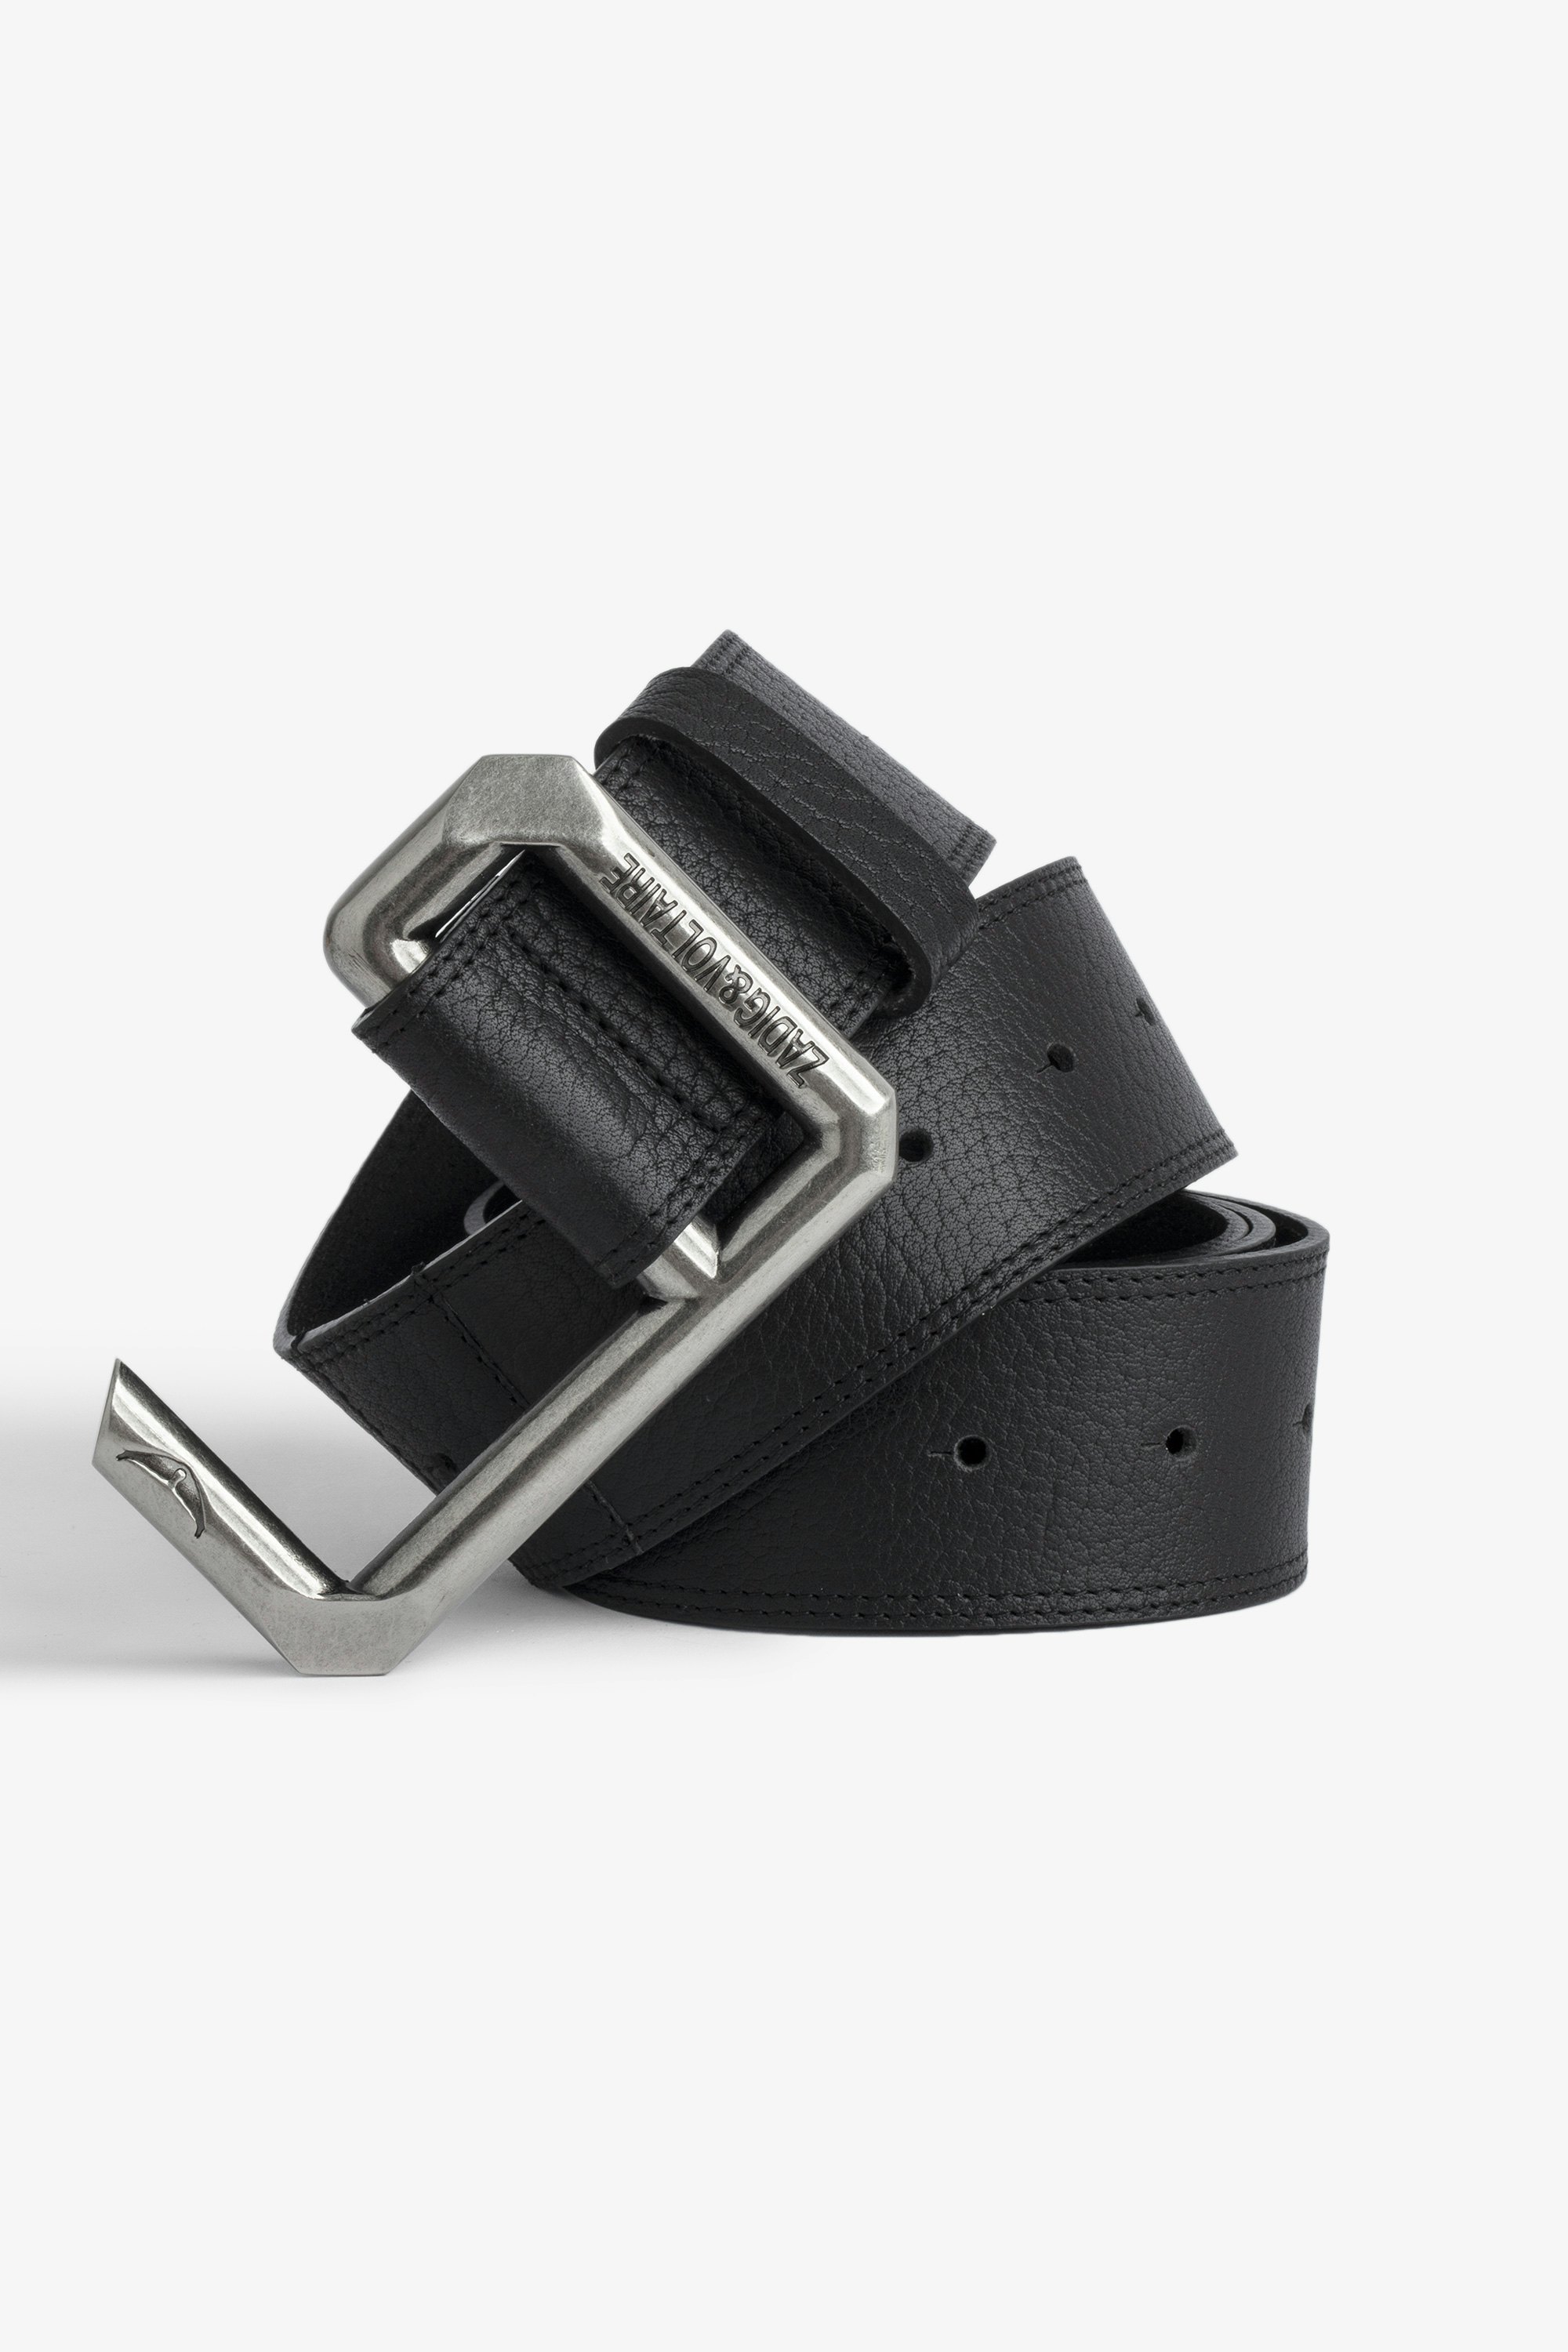 La Cecilia 50 mm Belt Women's adjustable black leather belt with C-shaped buckle